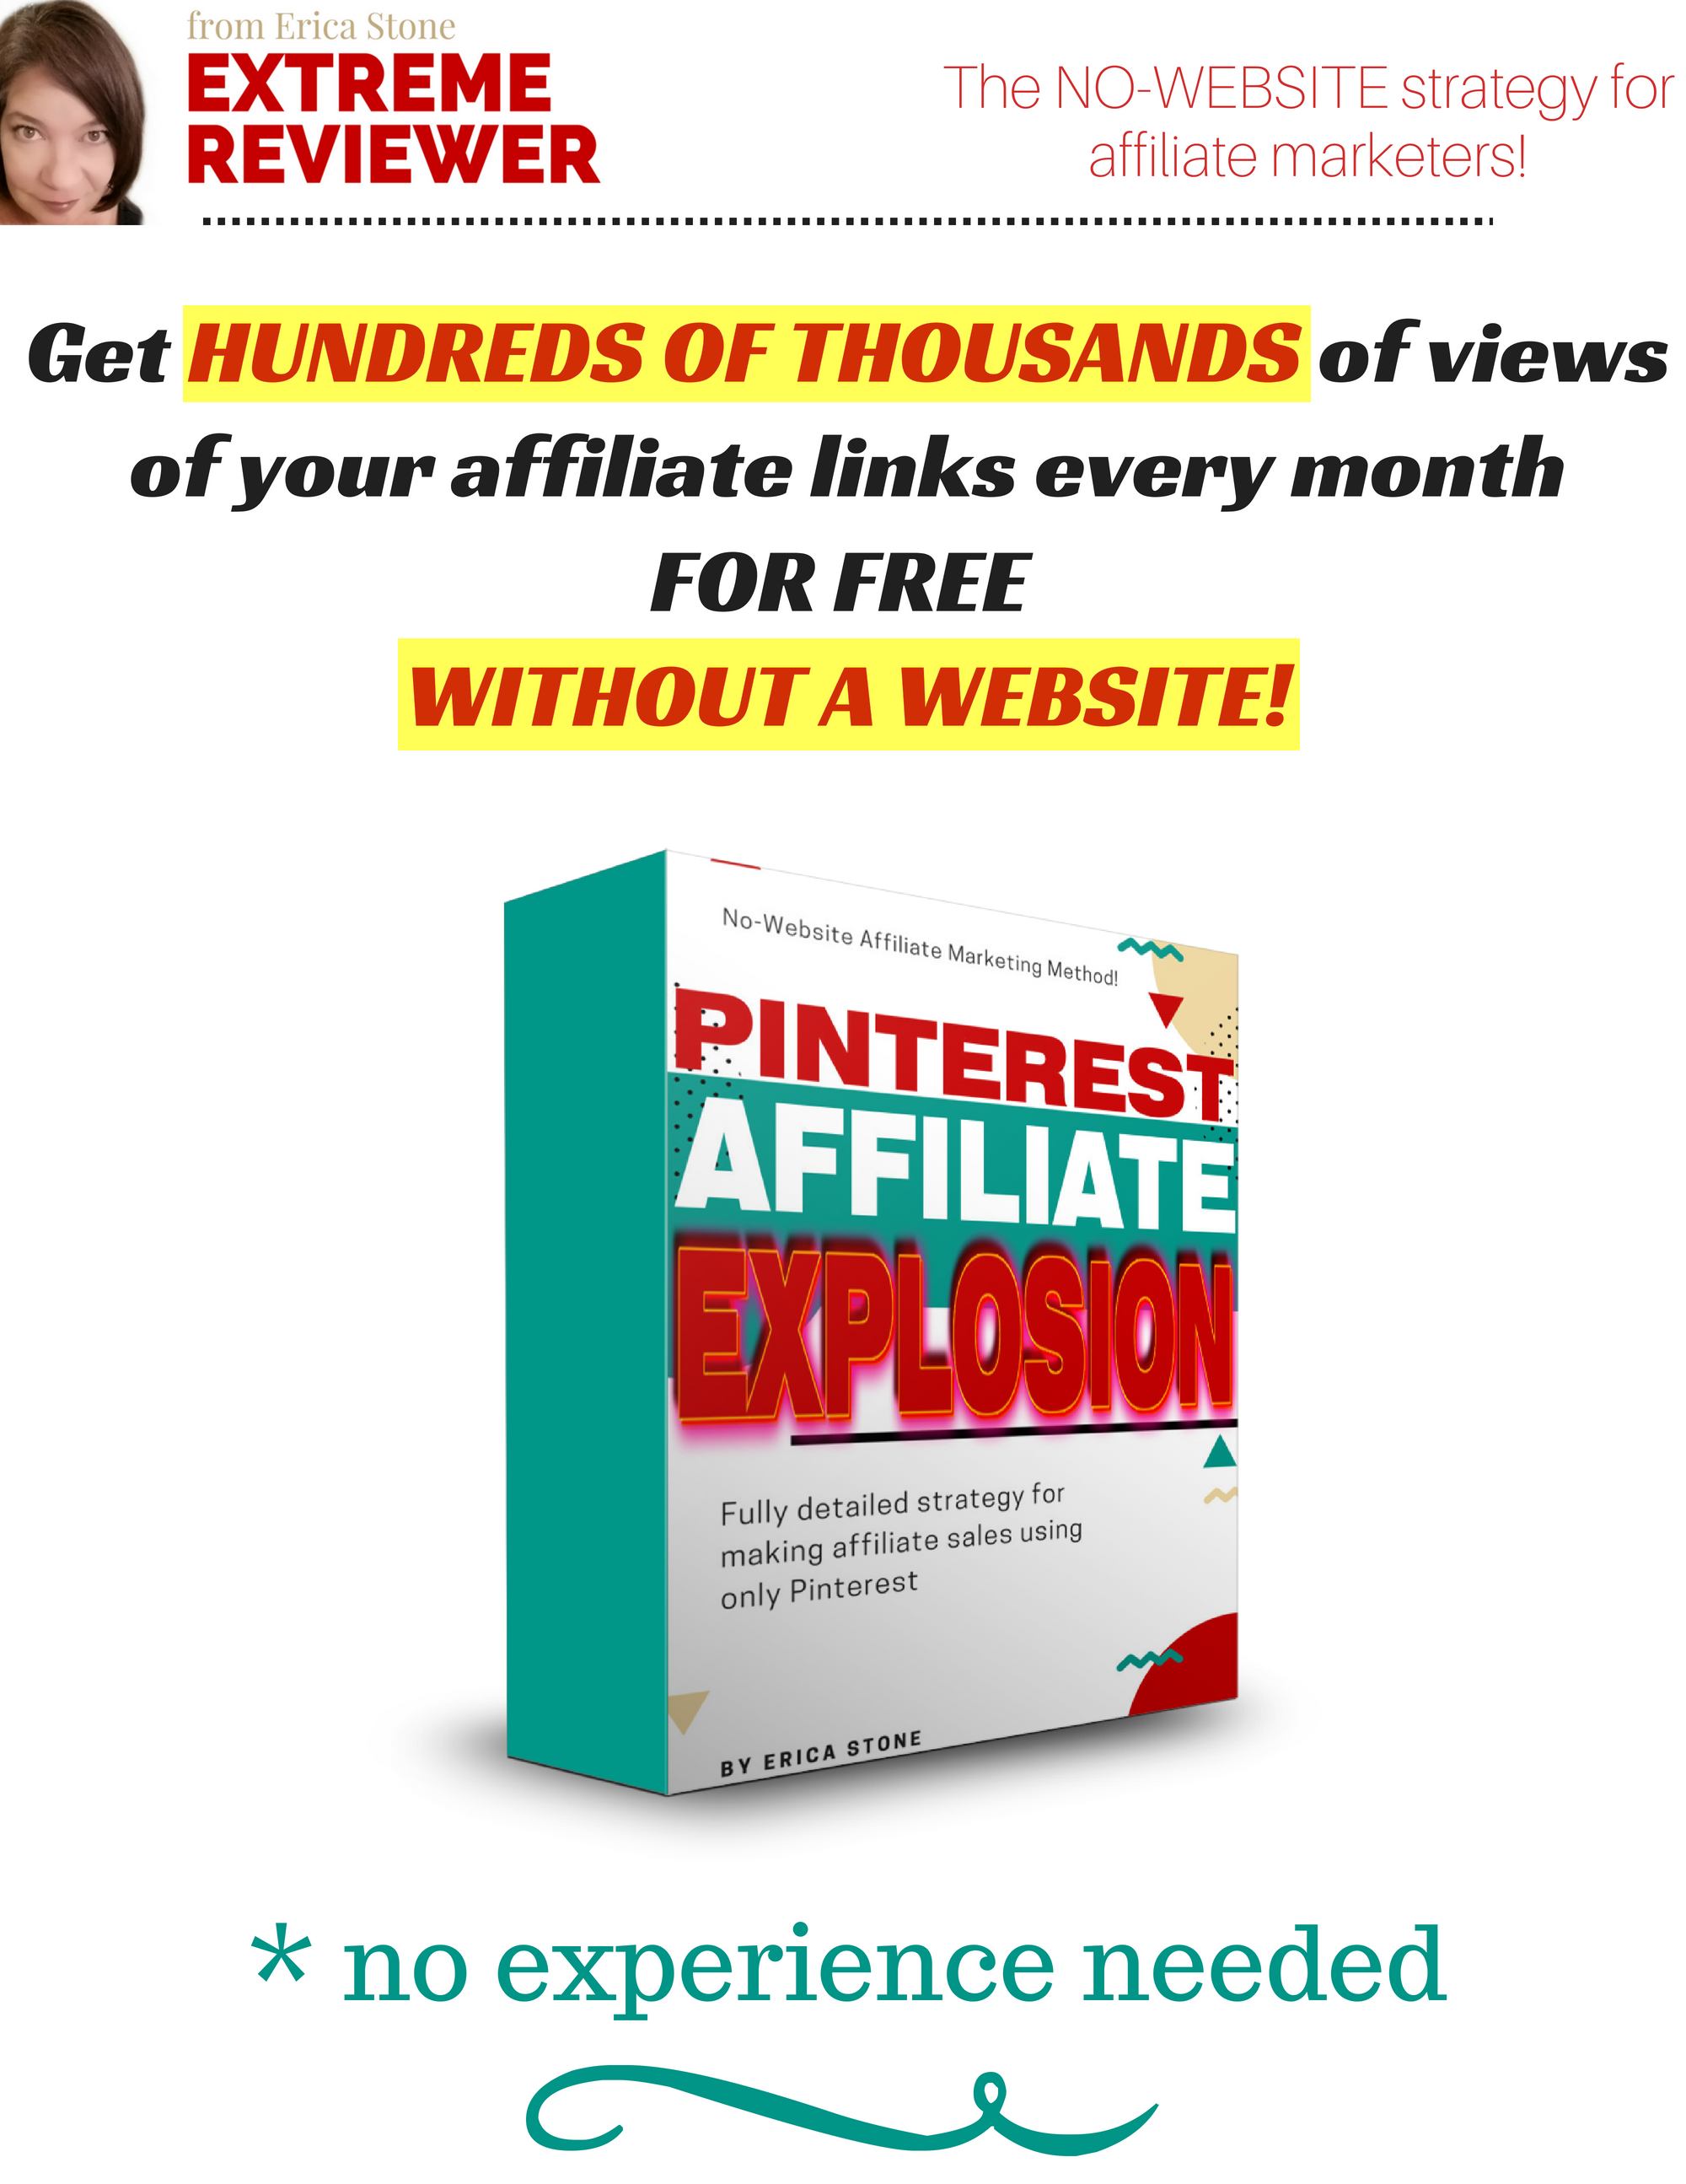 Pinterest Affiliate Explosion Download